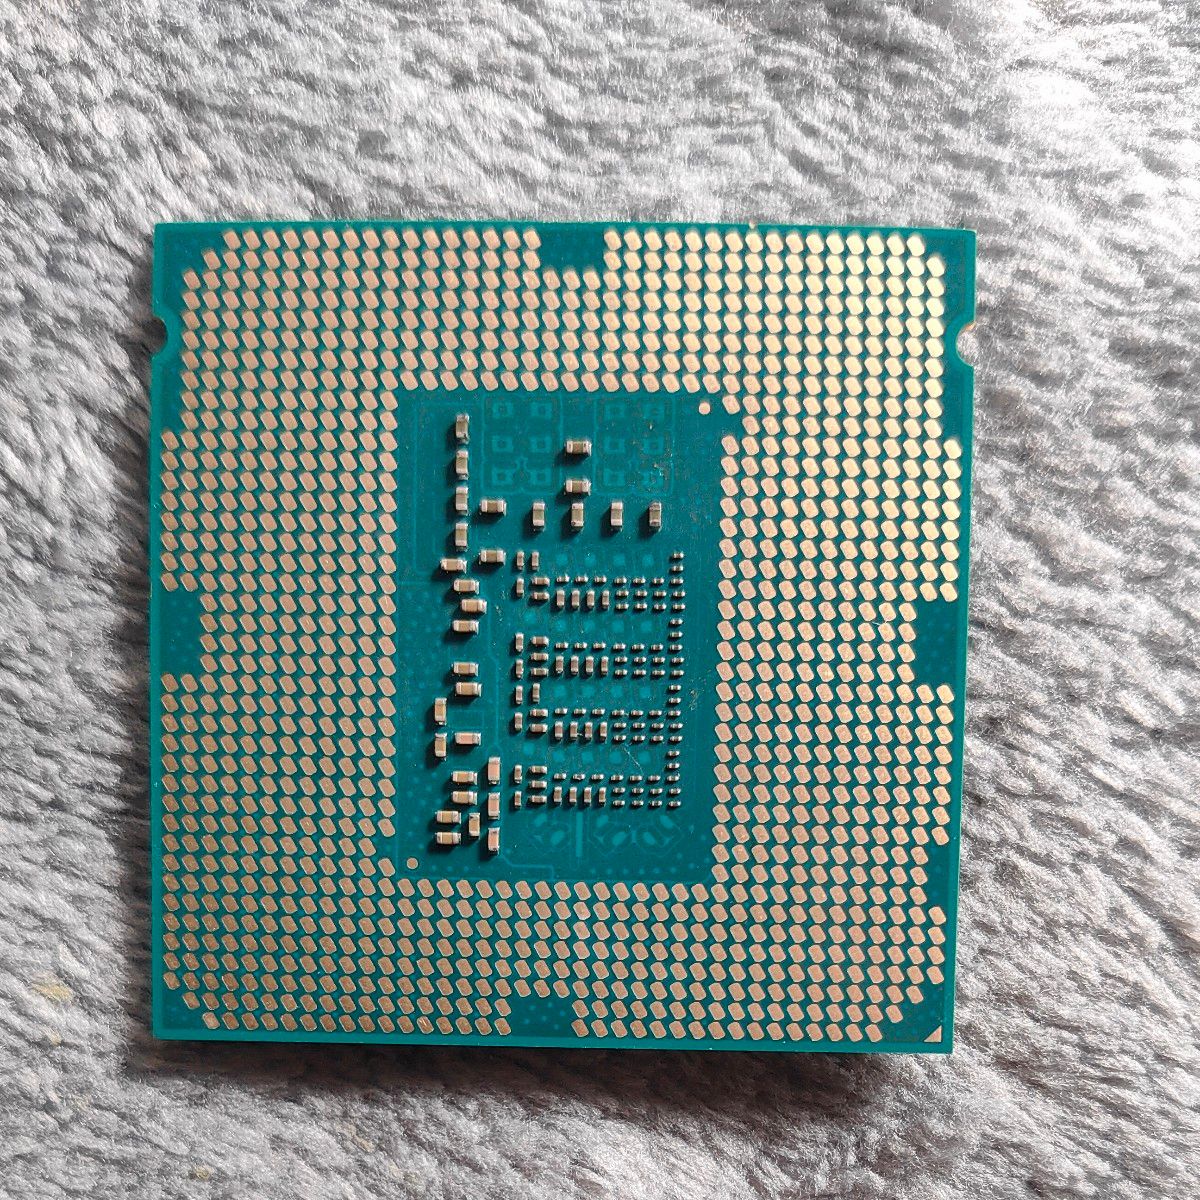 Intel Core CPU Xeon e3 1220 v3 動作確認済み